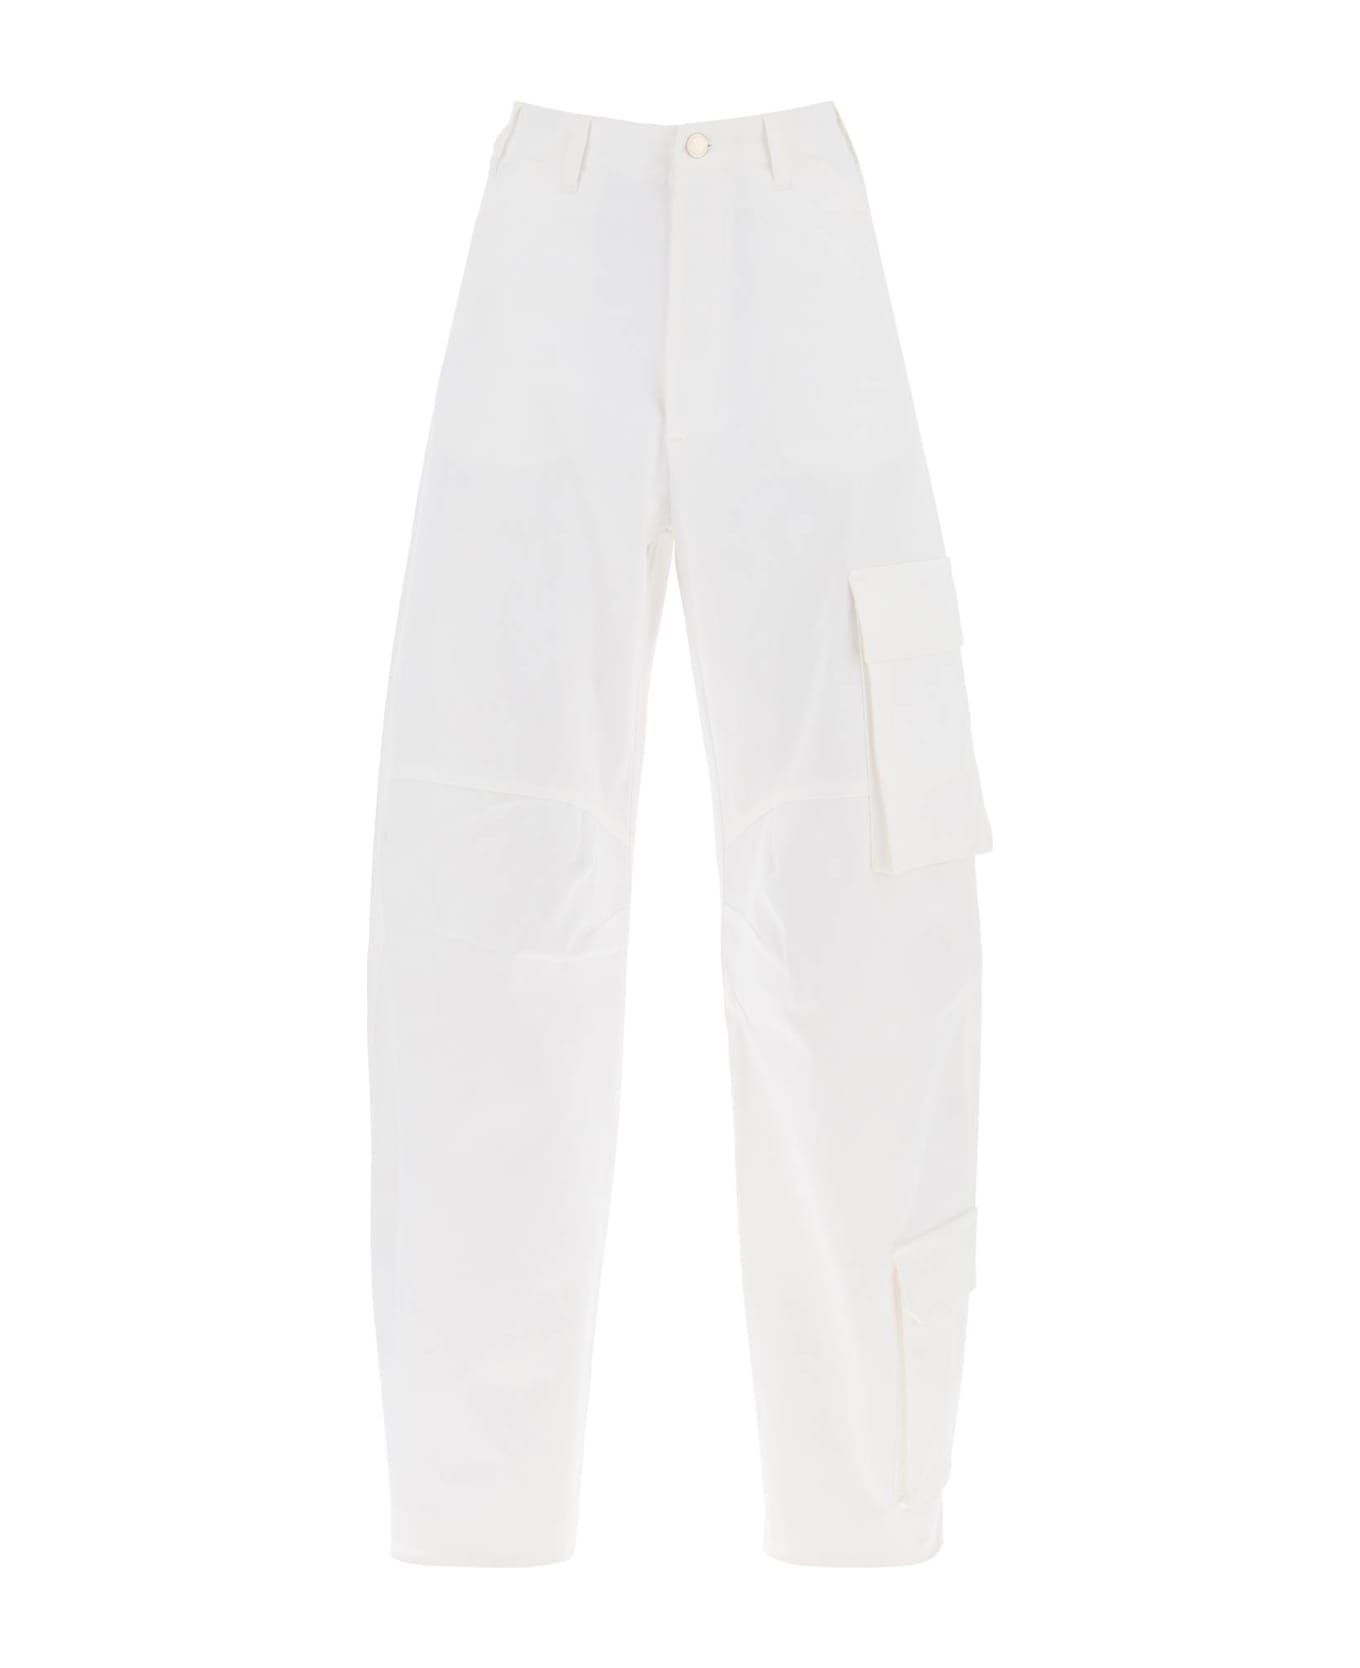 DARKPARK Rose Cargo Pants - WHITE